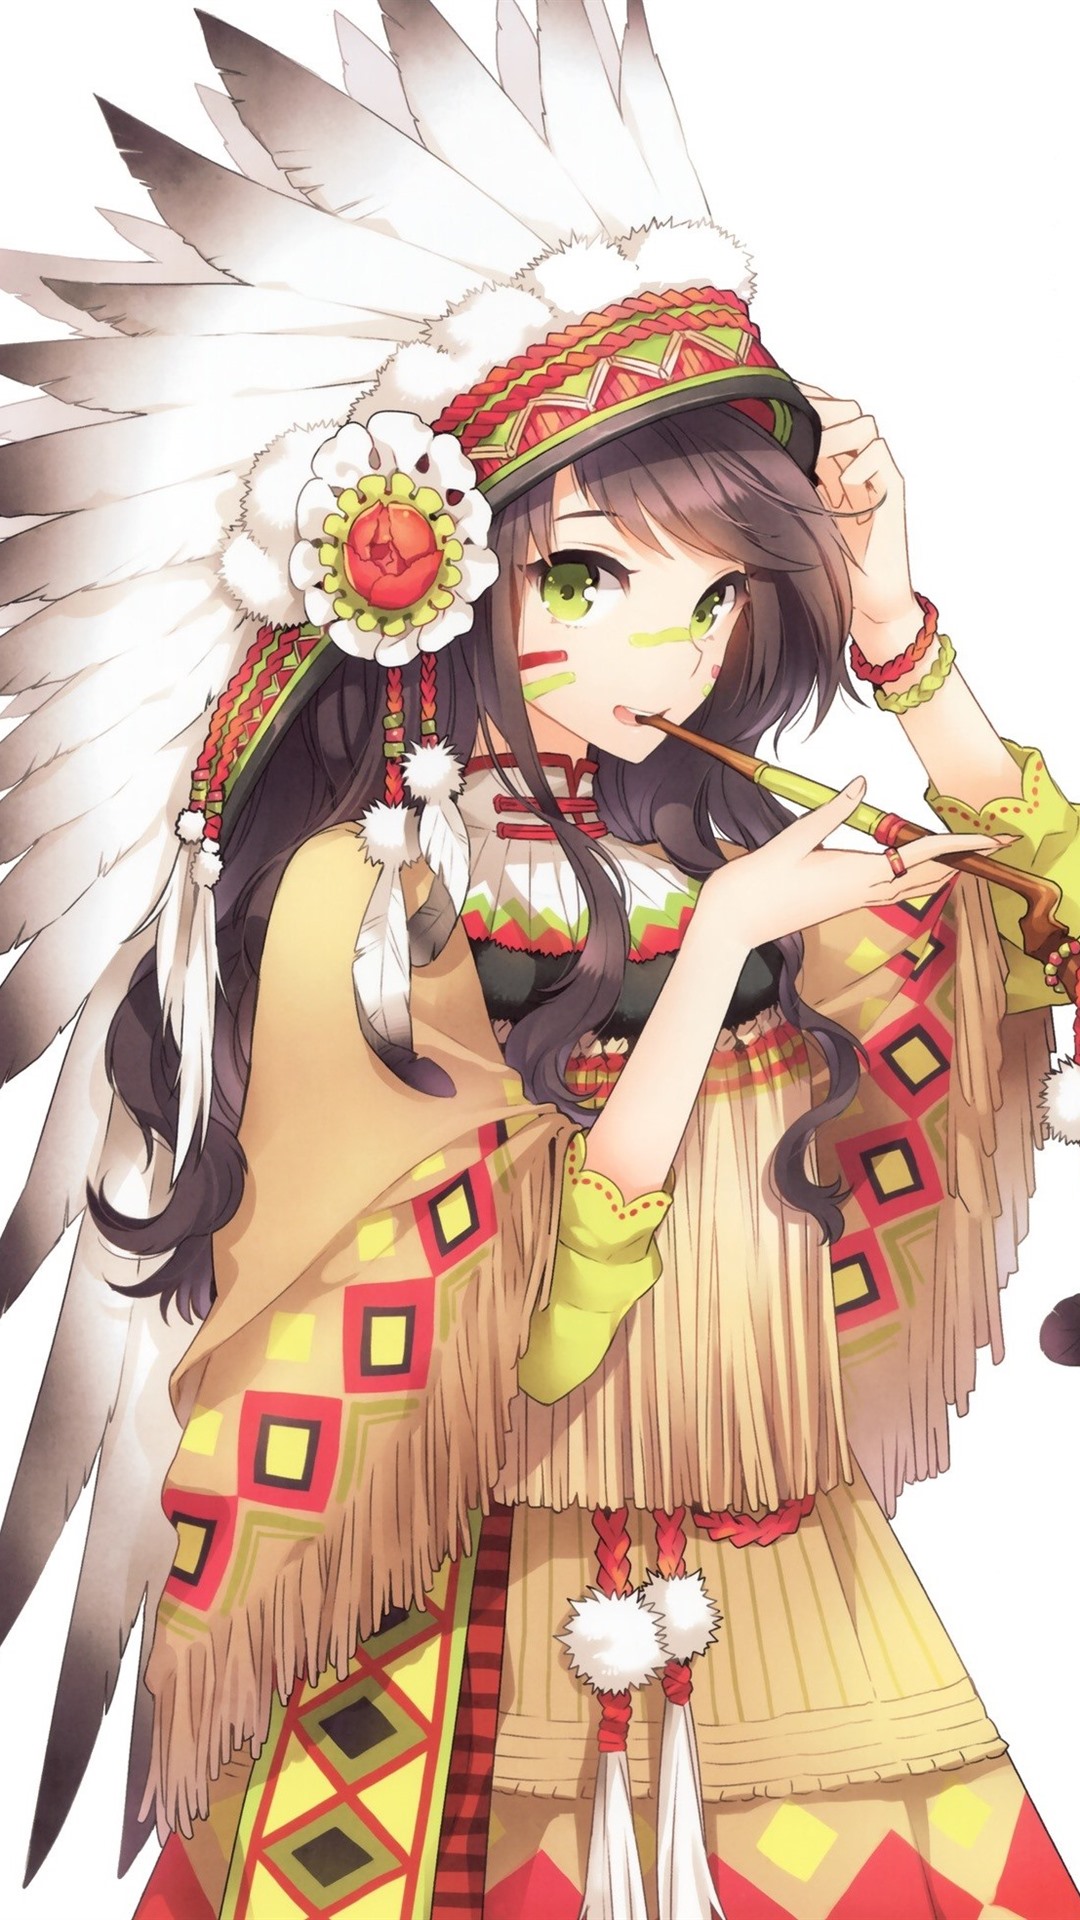 Iphone Wallpaper Indian Style Anime Girl - Anime Native American Art -  1080x1920 Wallpaper 